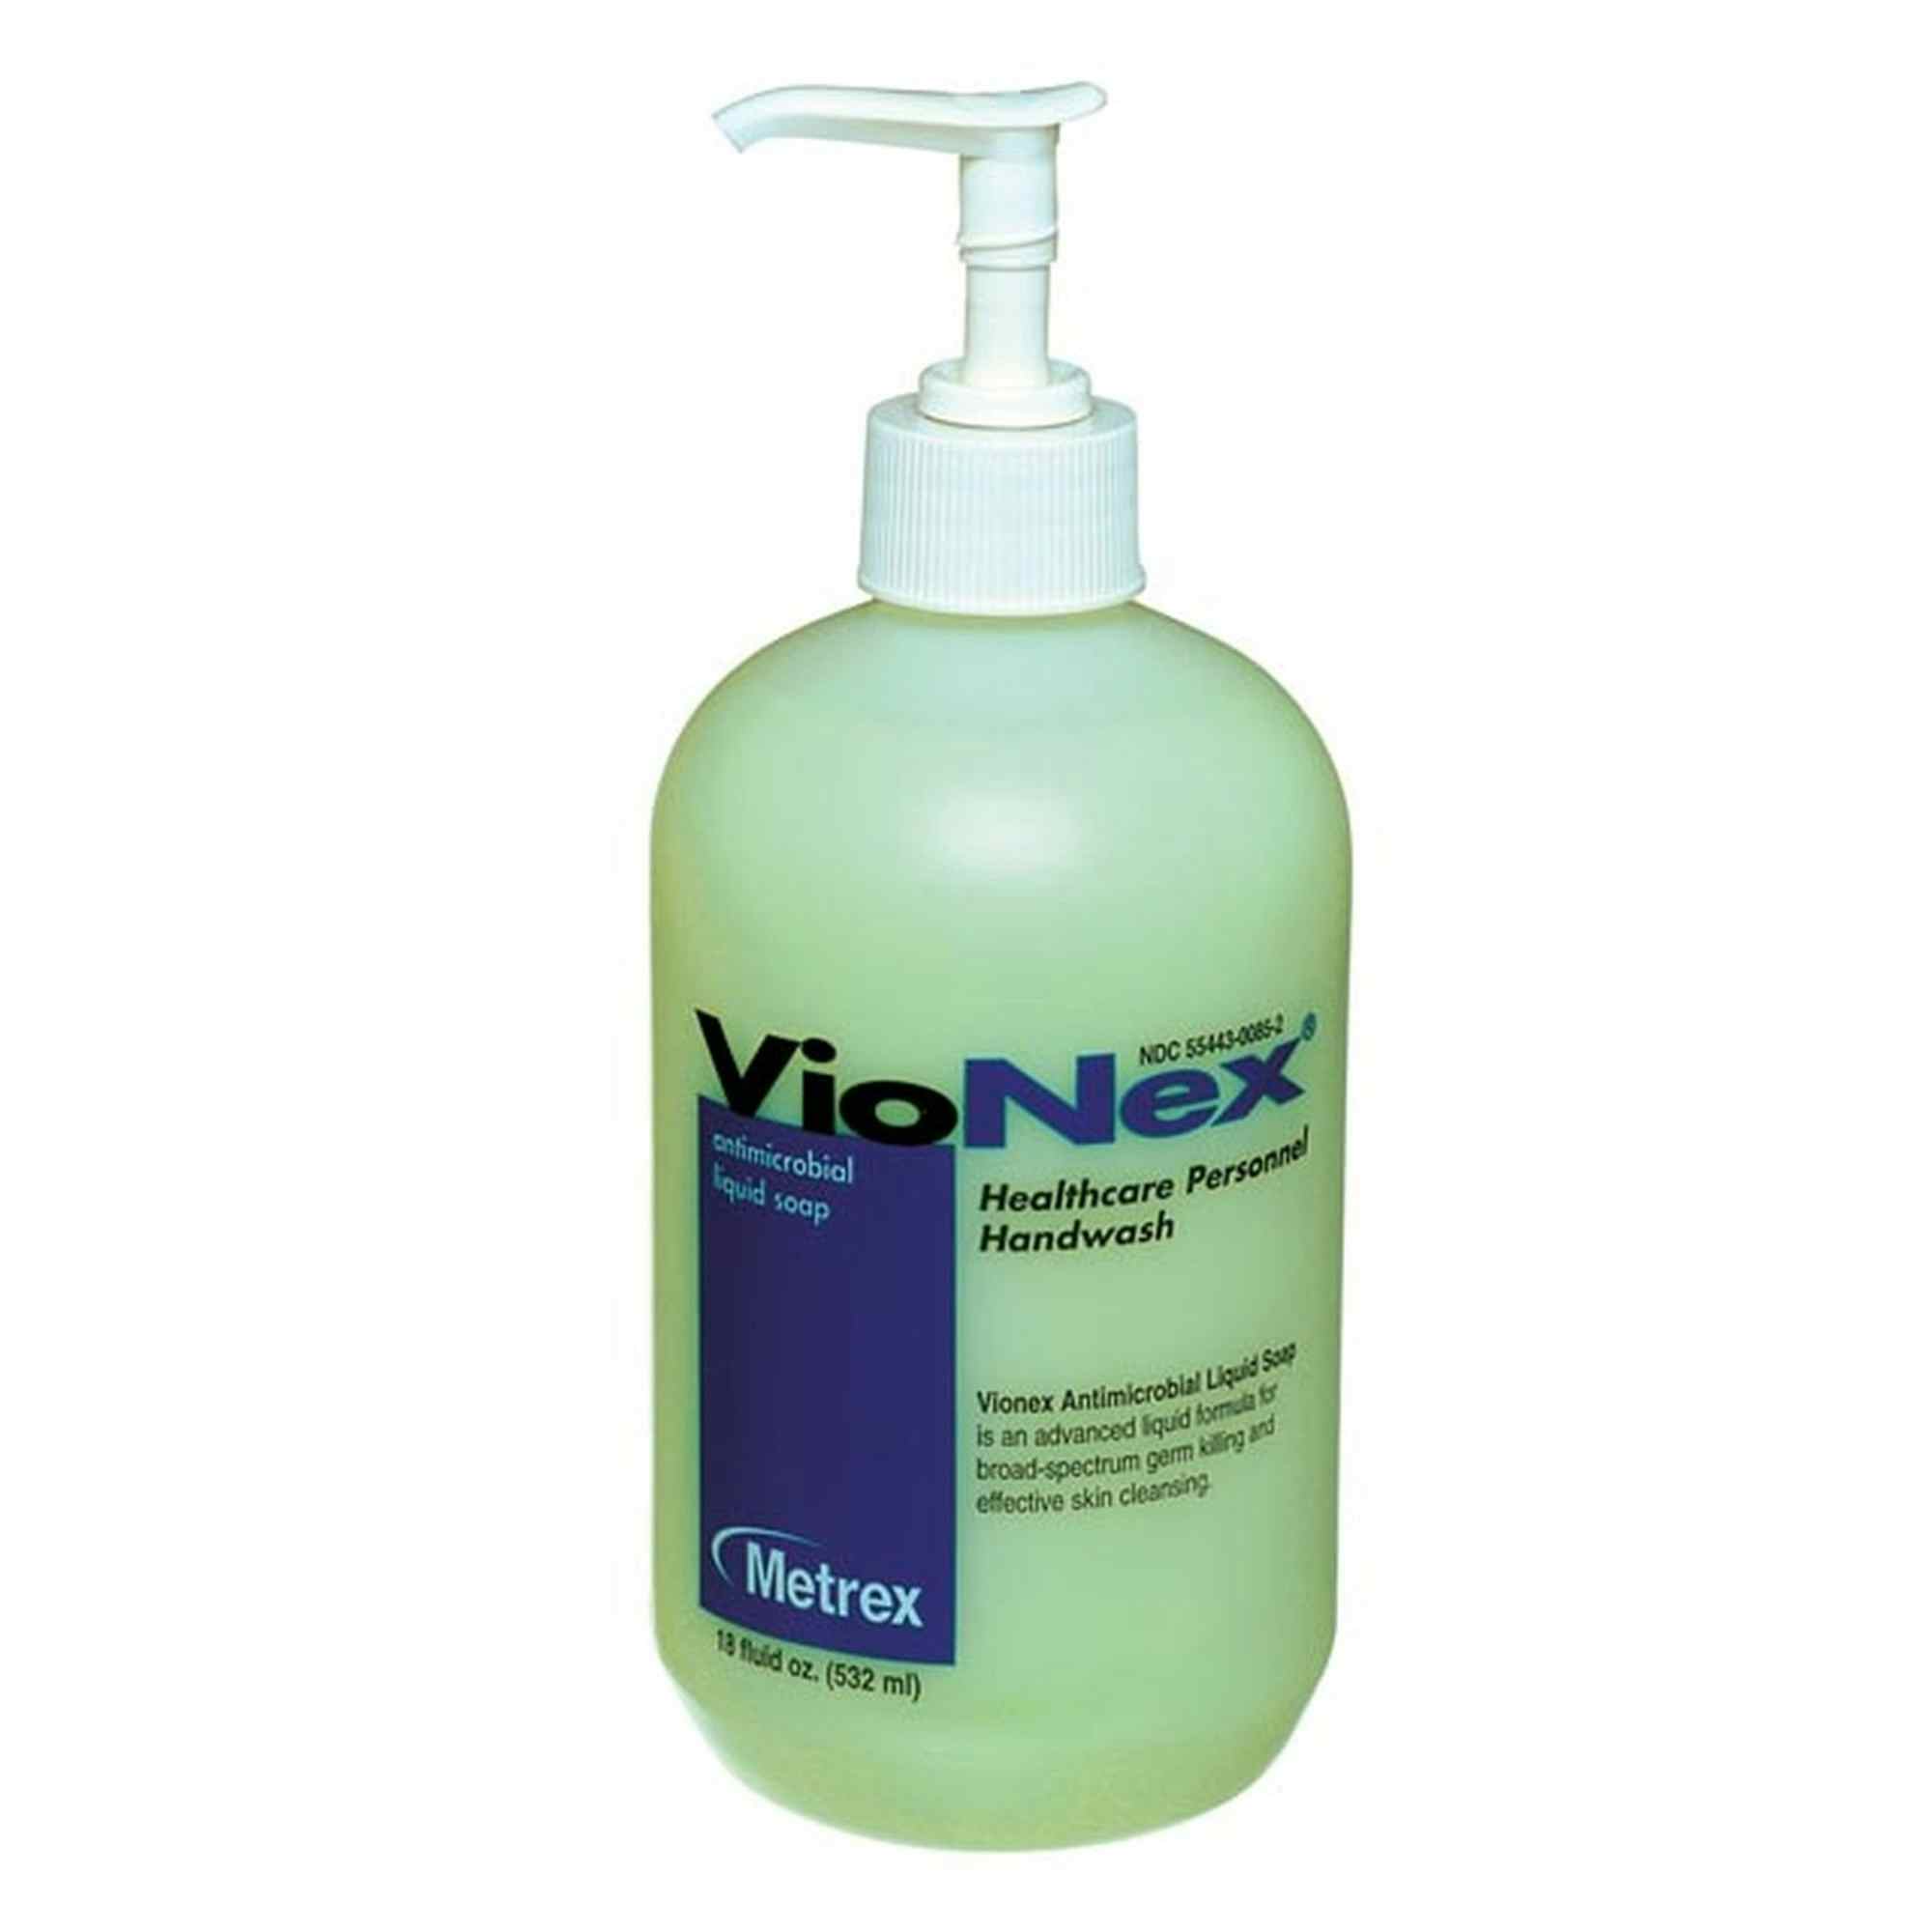 VioNex Antimicrobial Hand Soap, 10-1518, 18 oz. - Case of 12